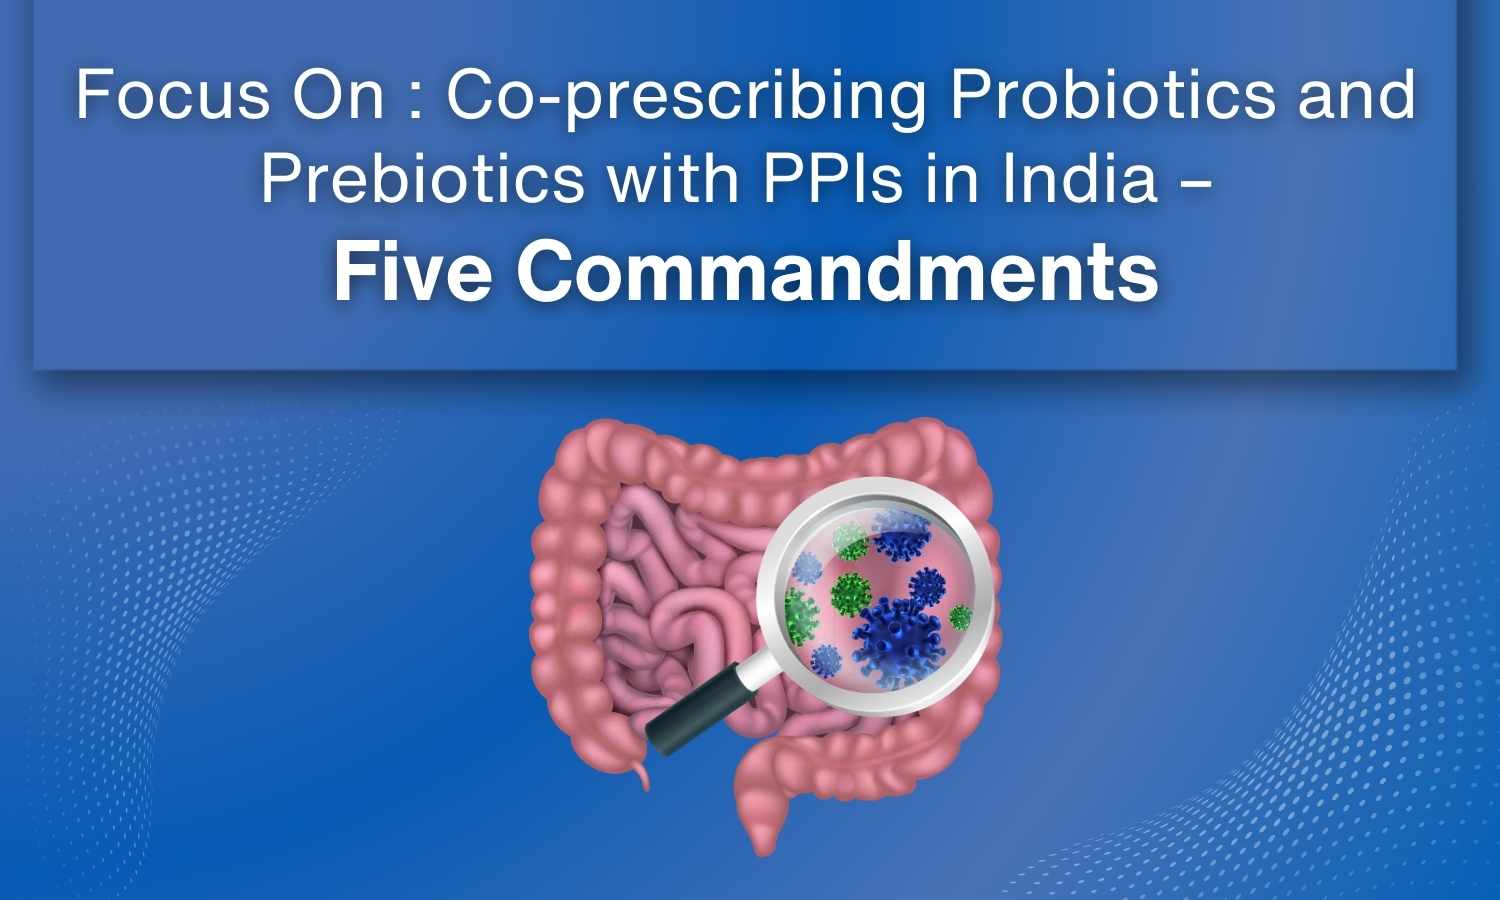 Focus On: Co-prescribing Probiotics and Prebiotics with PPIs in India - Five Commandments